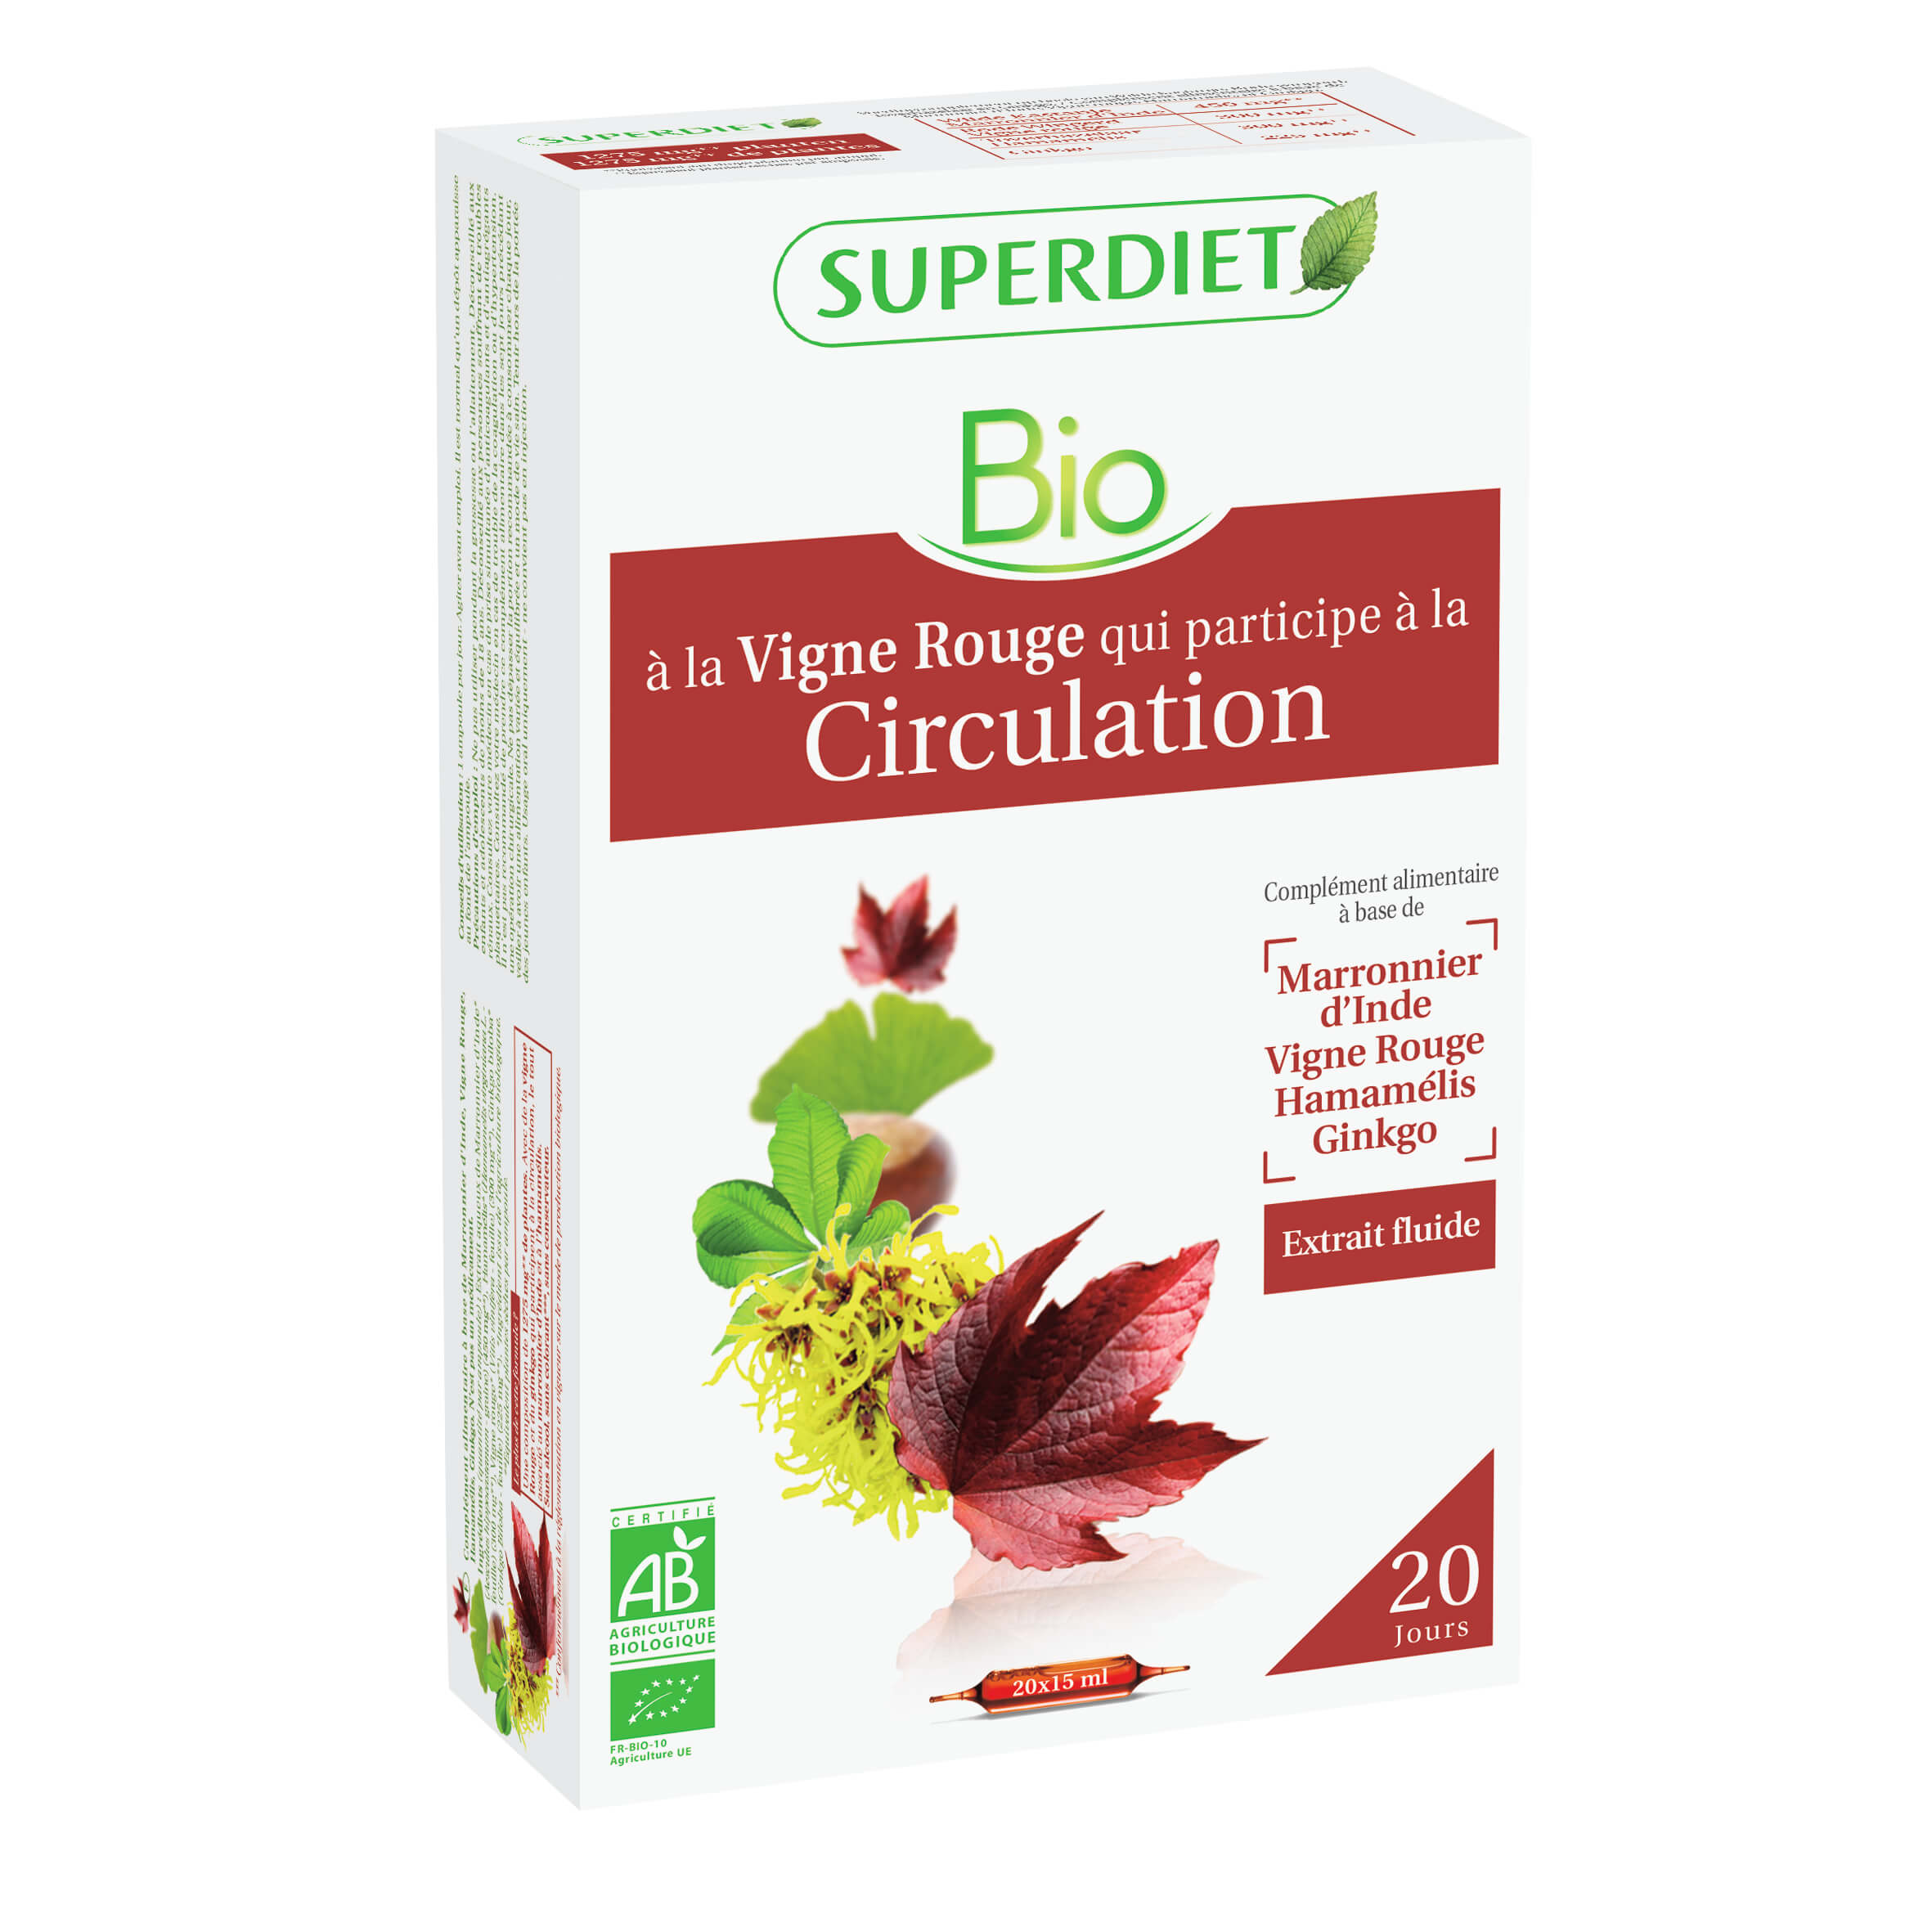 Super Diet Complex rode wingerd circulatie bio 20x15ml PL 483/144